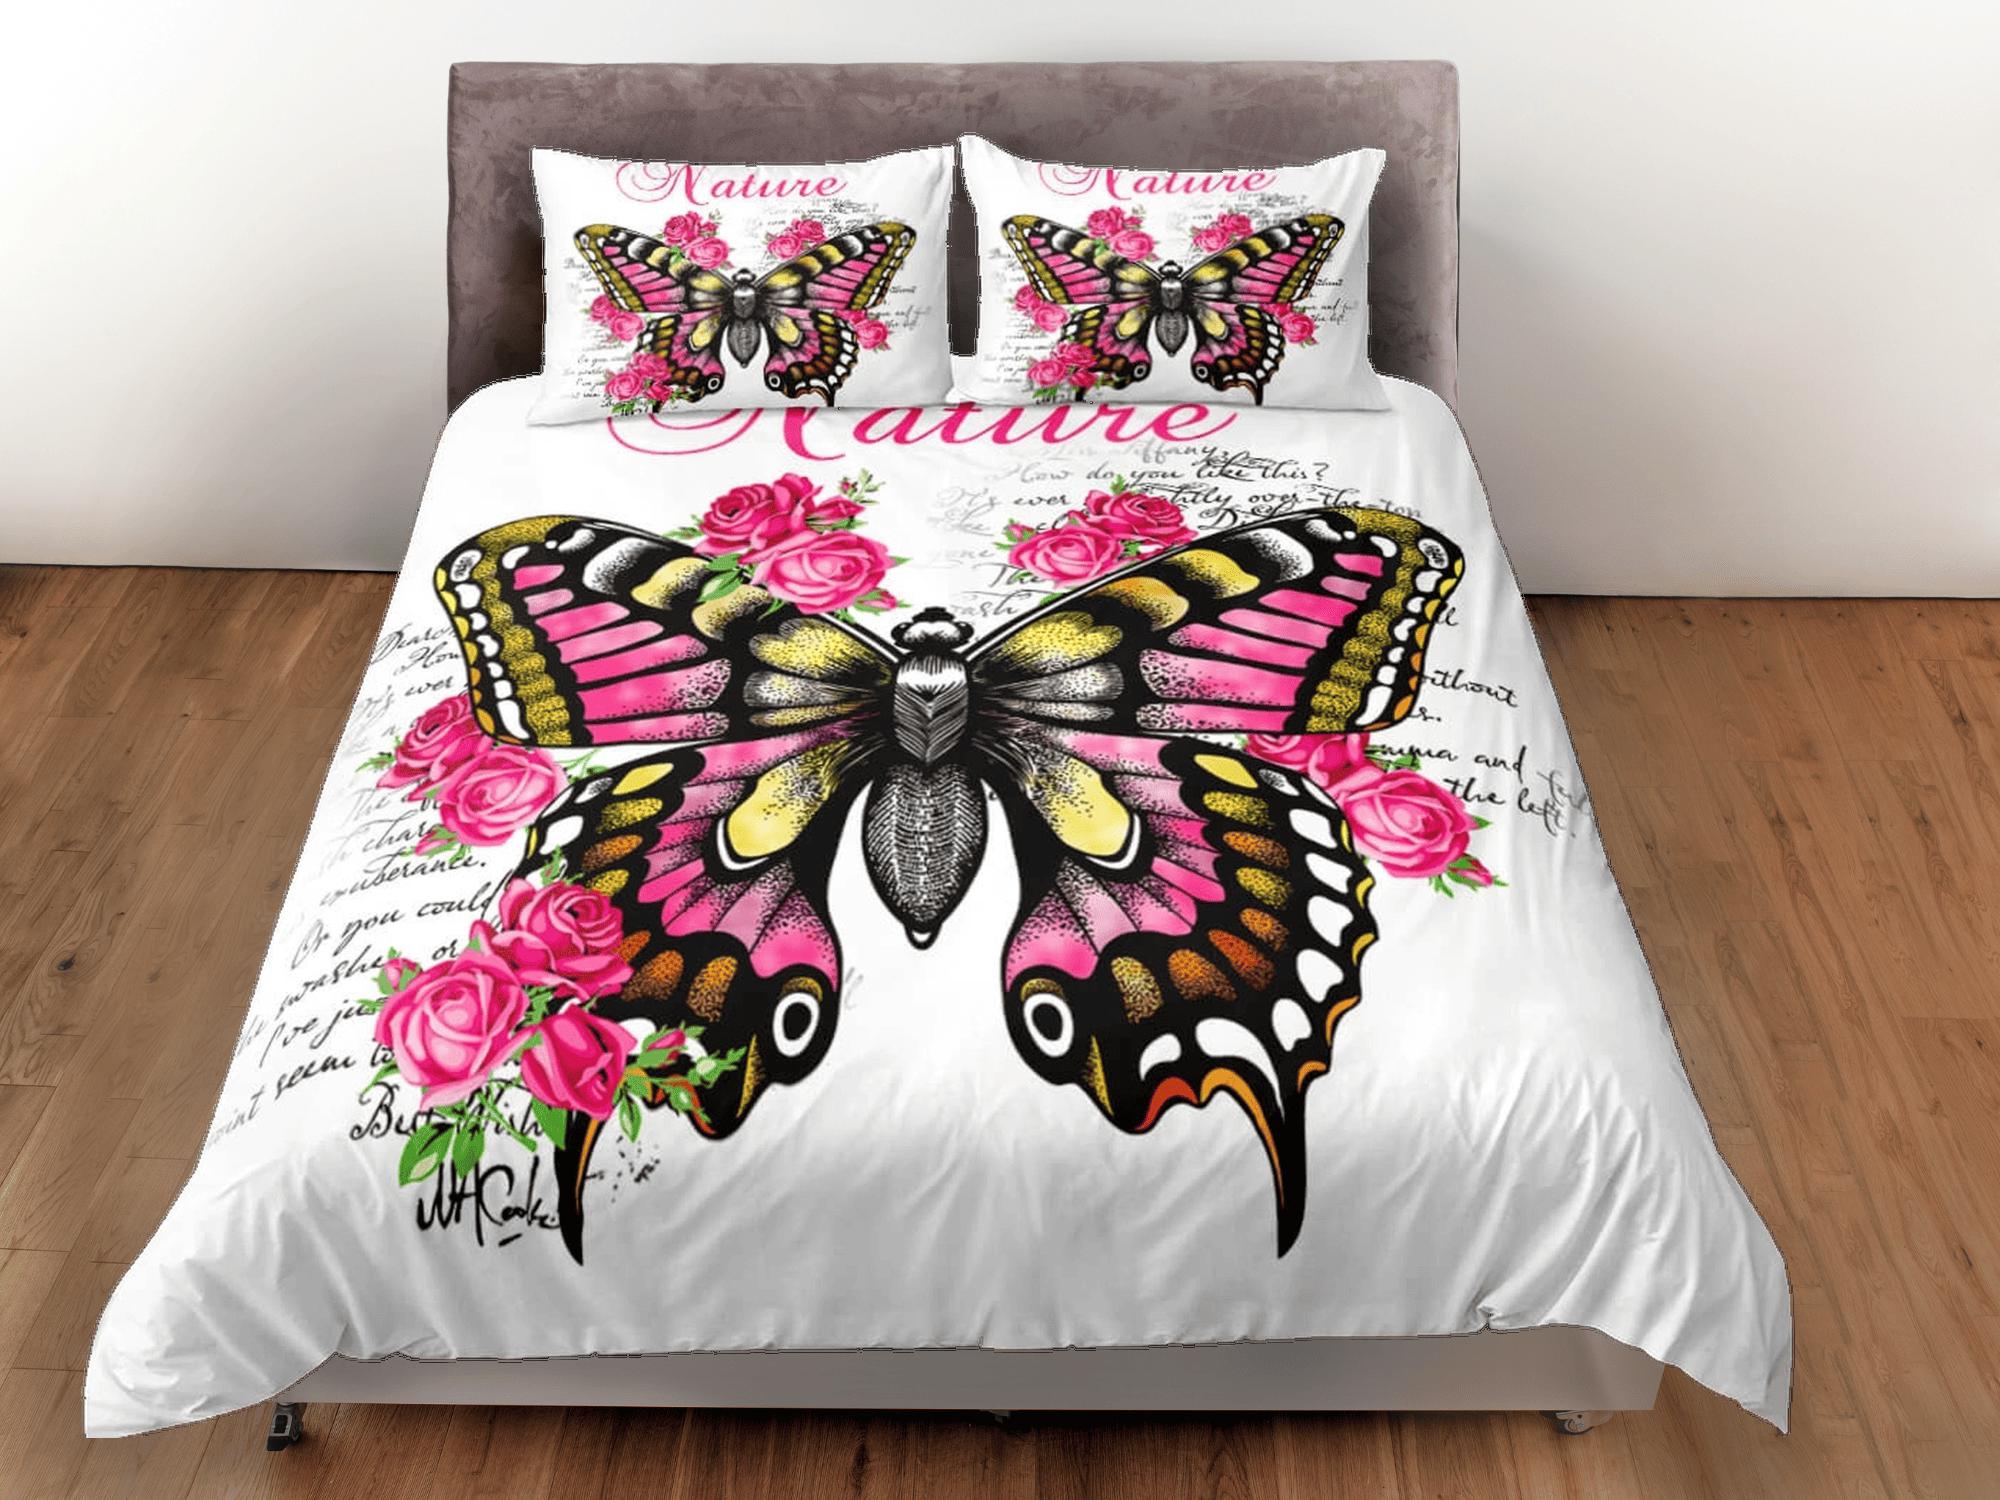 daintyduvet Nature lover pink butterfly bedding duvet cover colorful dorm bedding, full size adult duvet king queen twin, nursery toddler bedding